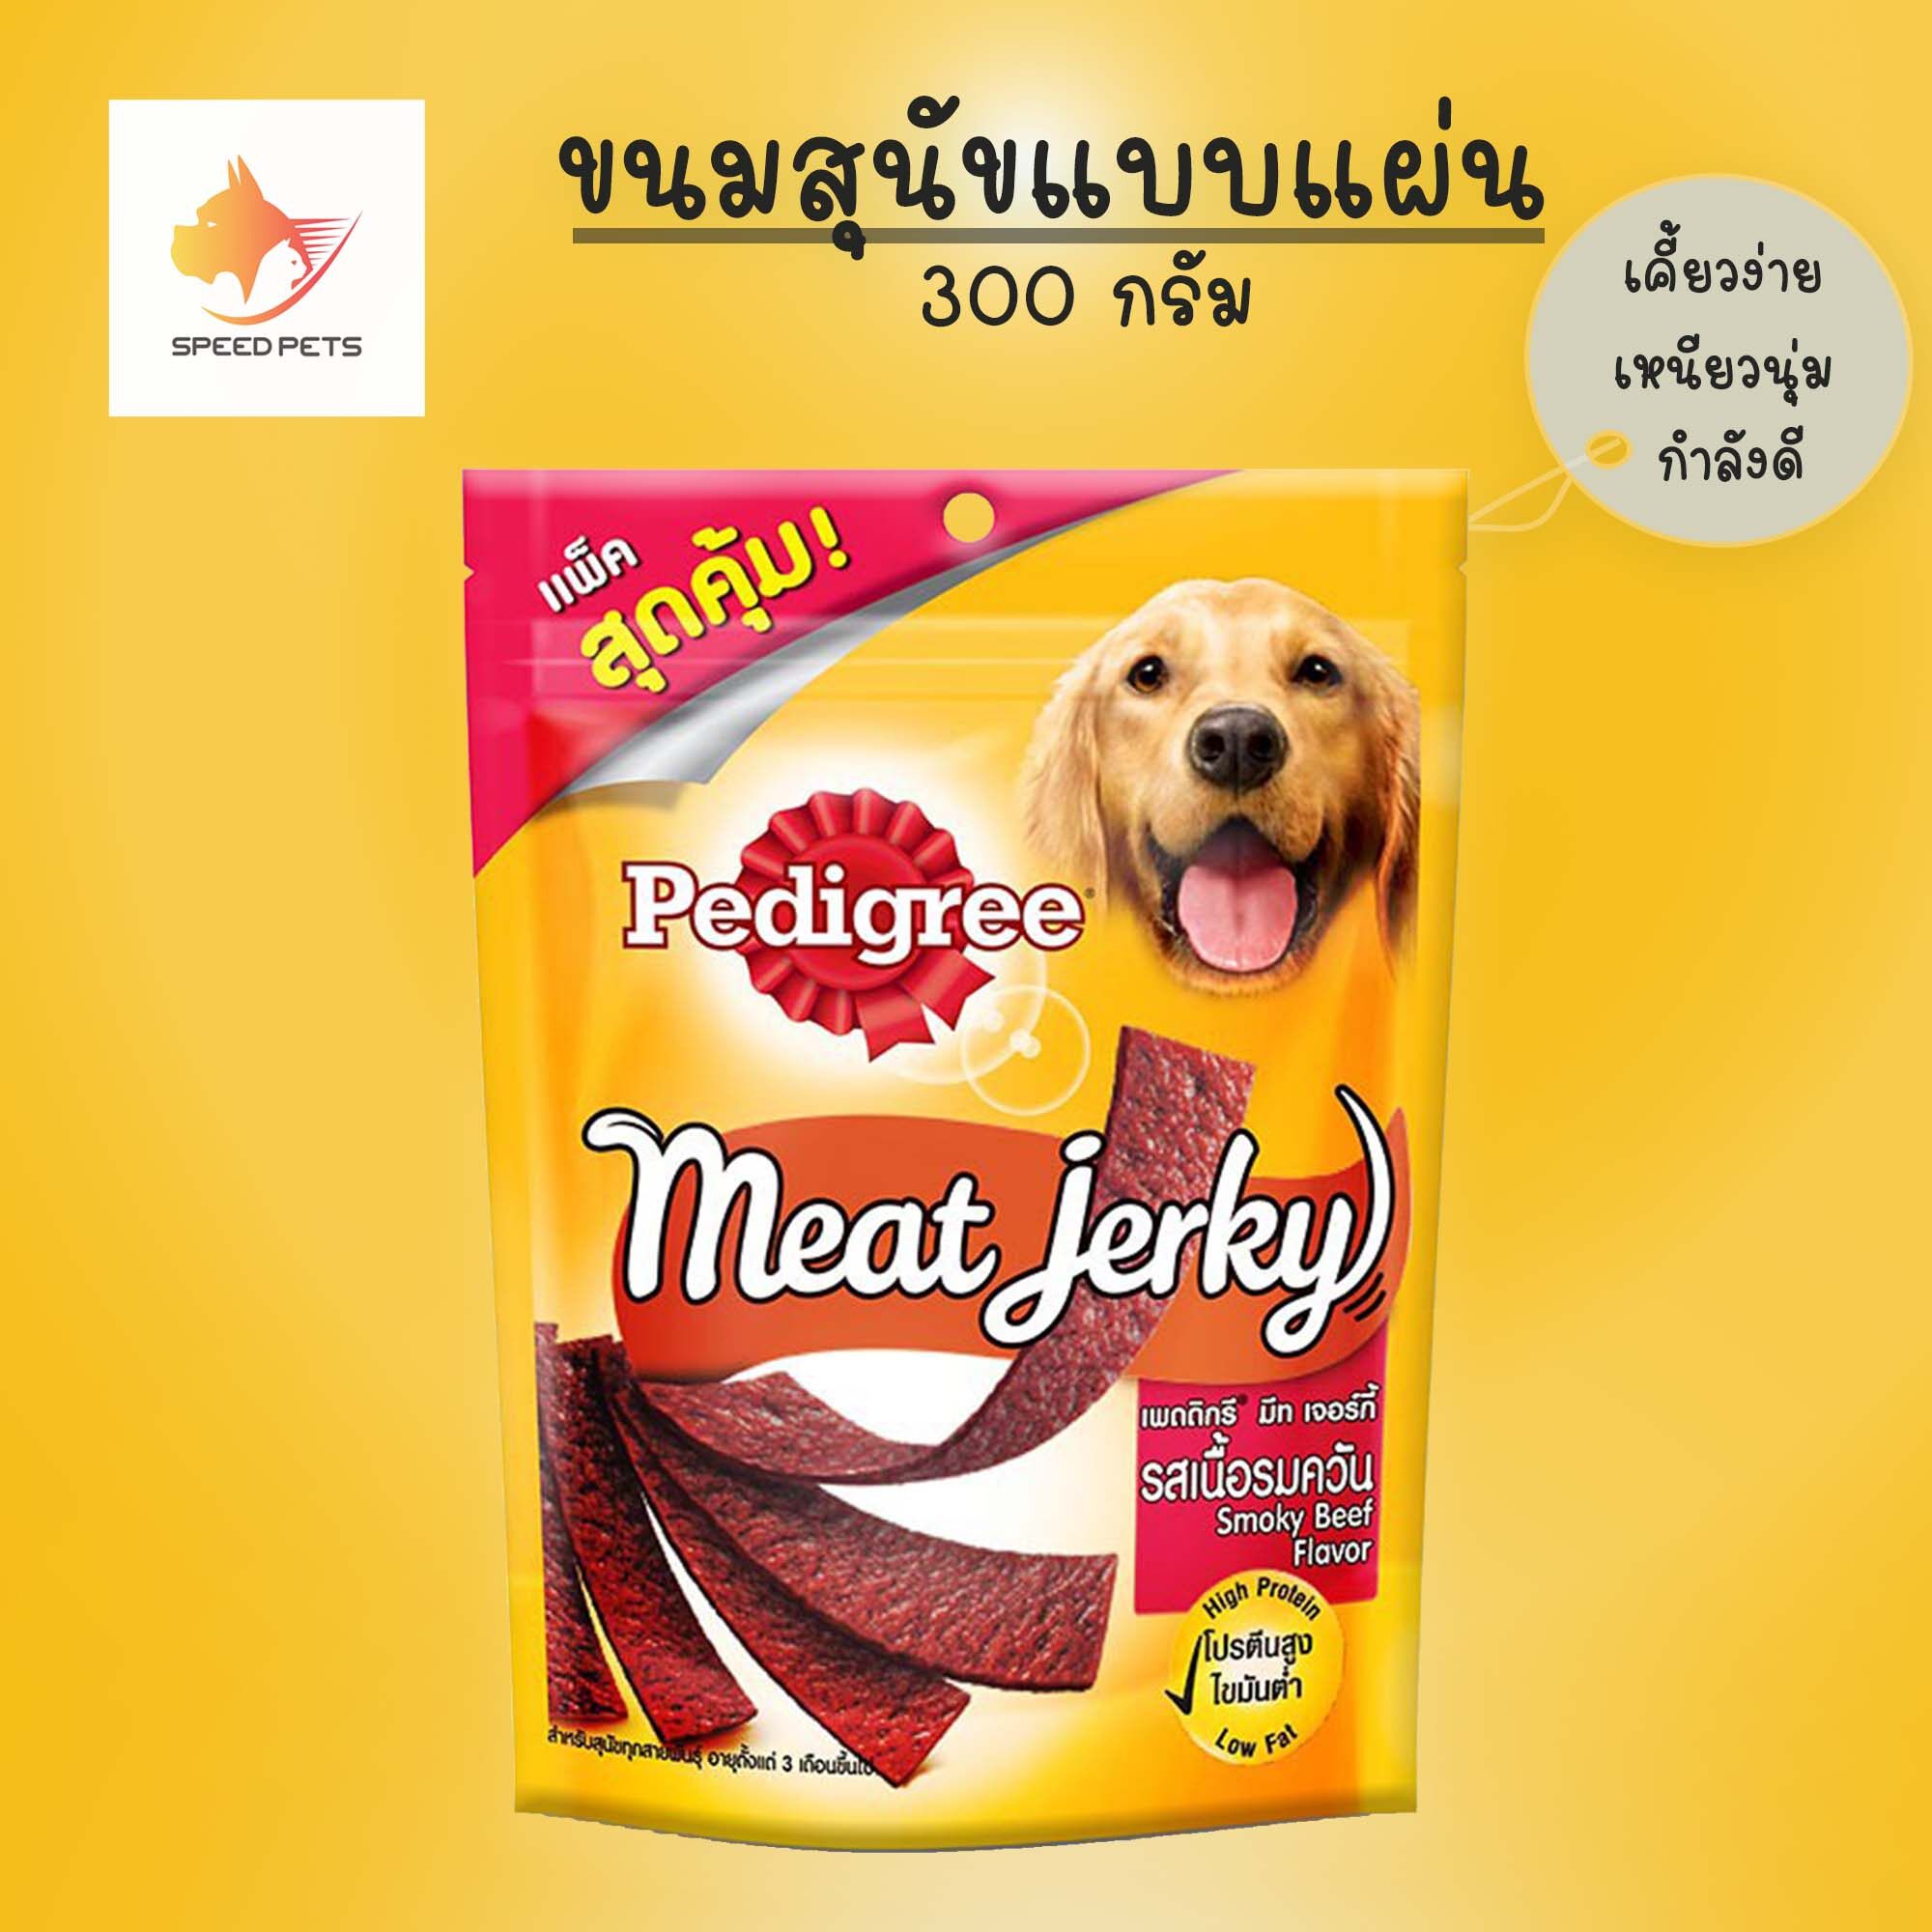 PEDIGREE Meat Jerky Beef Flavour เพดดิกรี ขนมสุนัข มีทเจอร์กี้ รสเนื้อ 300กรัม จำนวน 1 ถุง